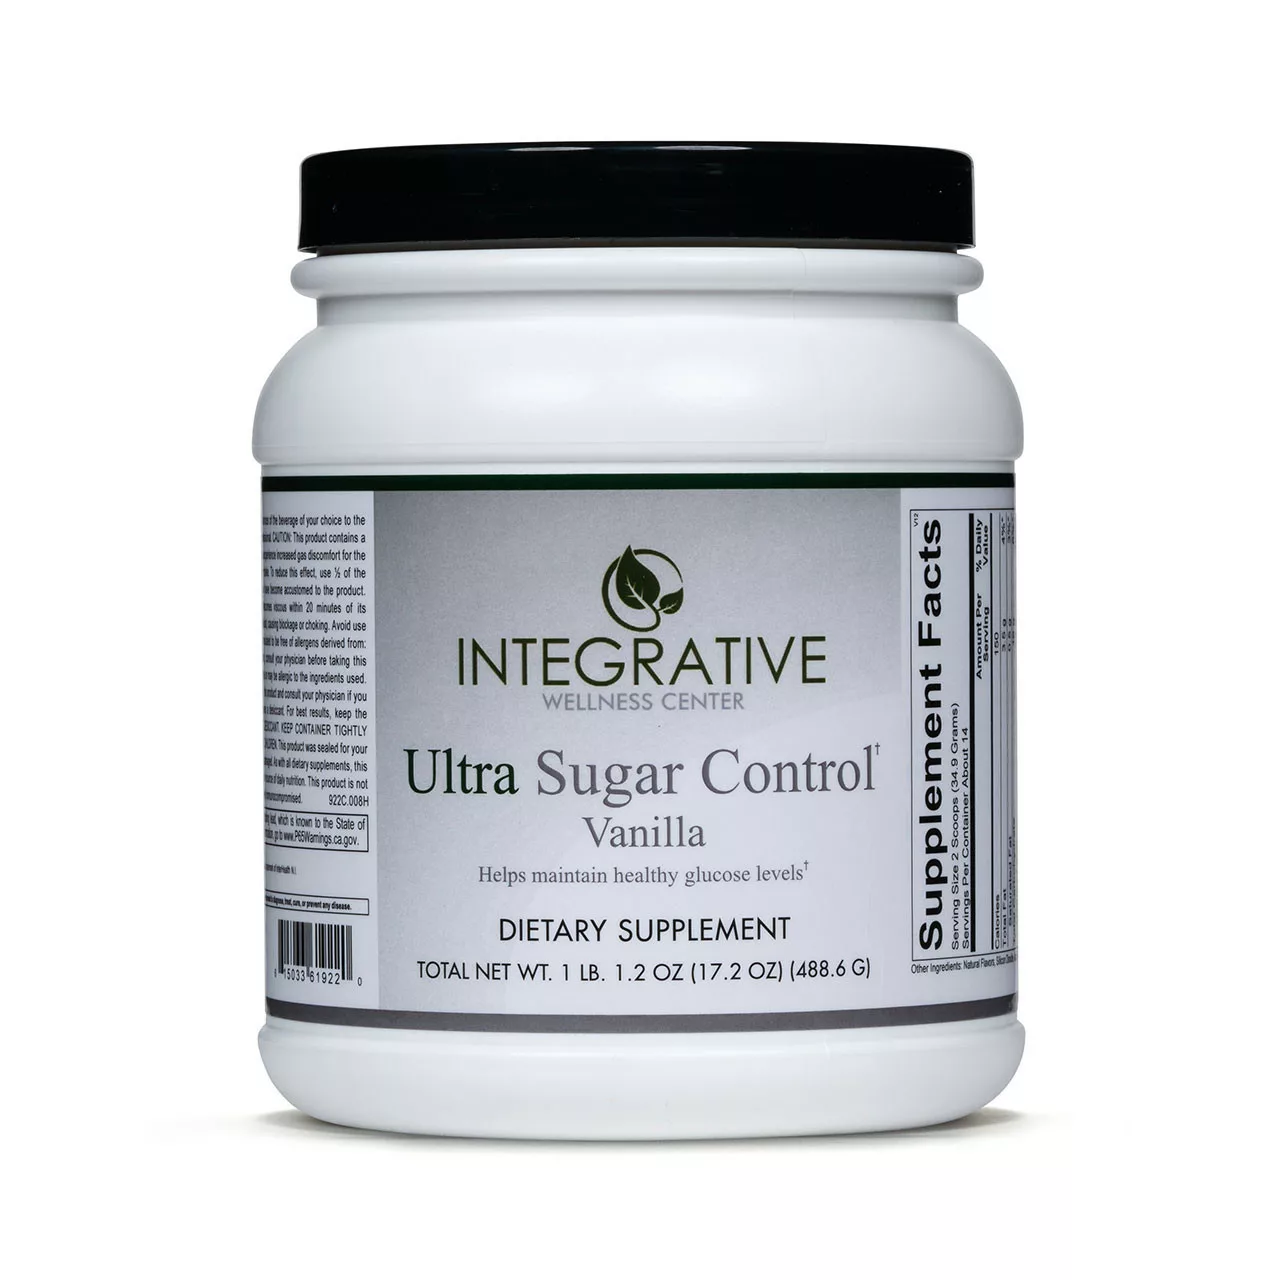 UltraSugar Control vanilla bottle